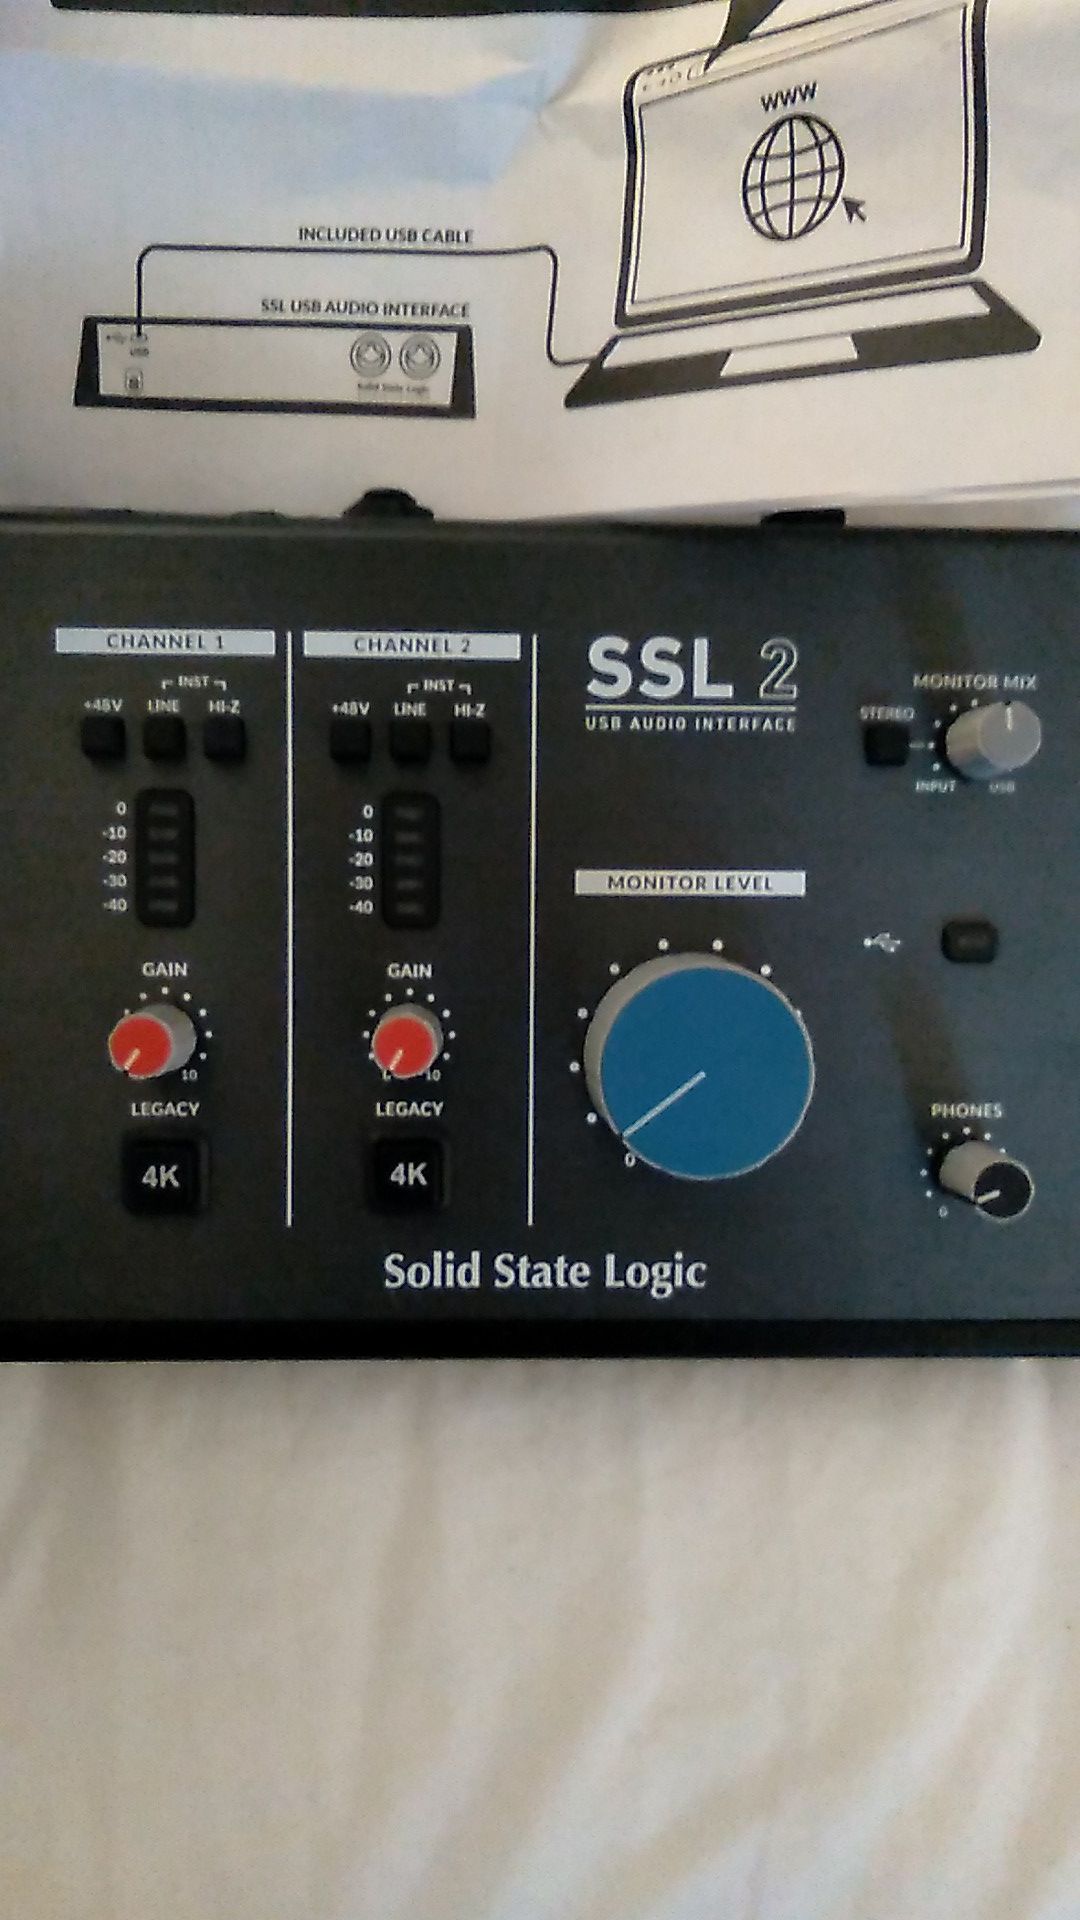 SSL2 USB Audio Interface